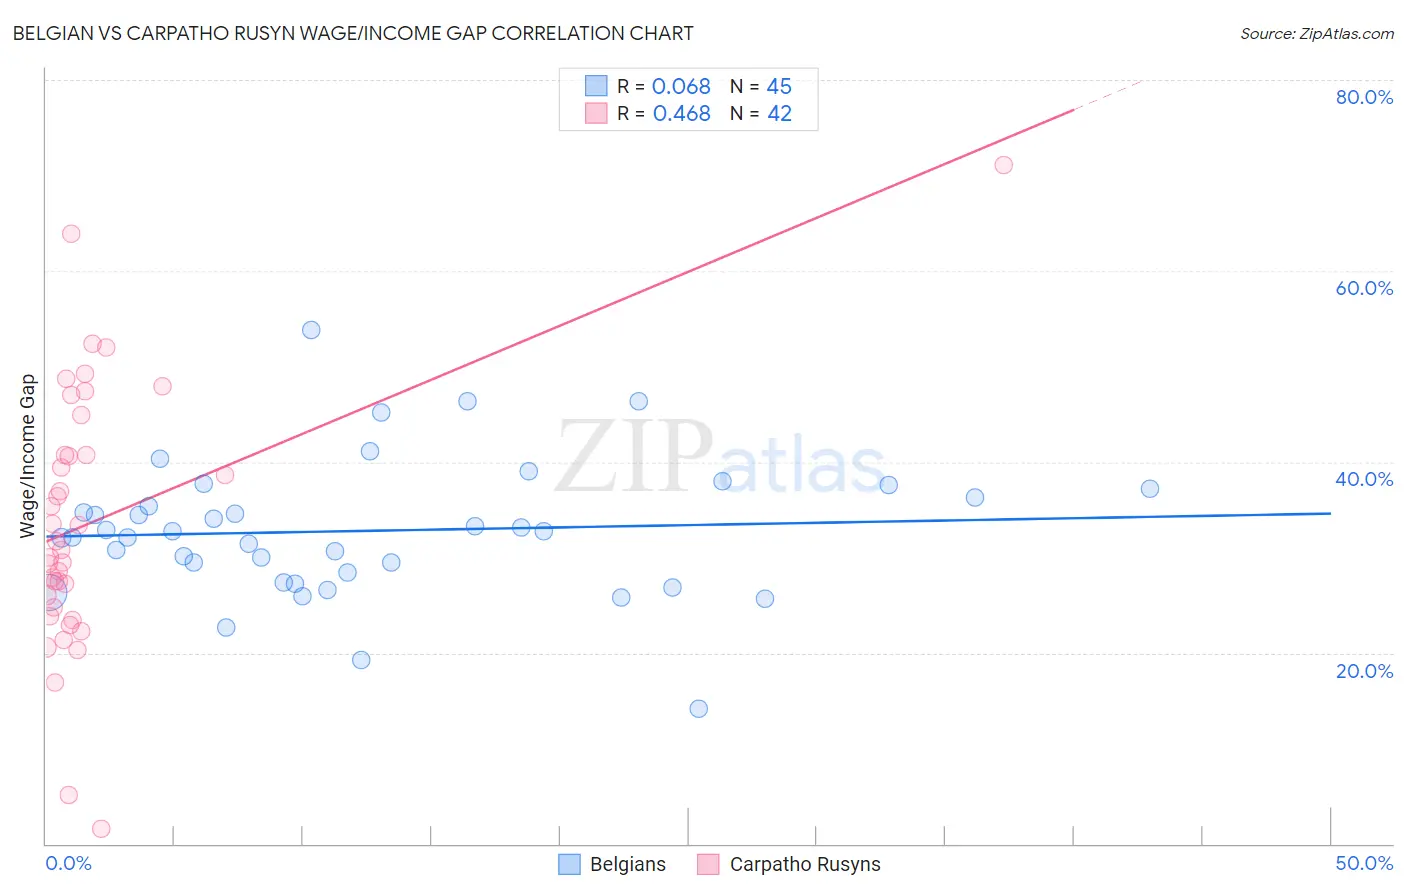 Belgian vs Carpatho Rusyn Wage/Income Gap